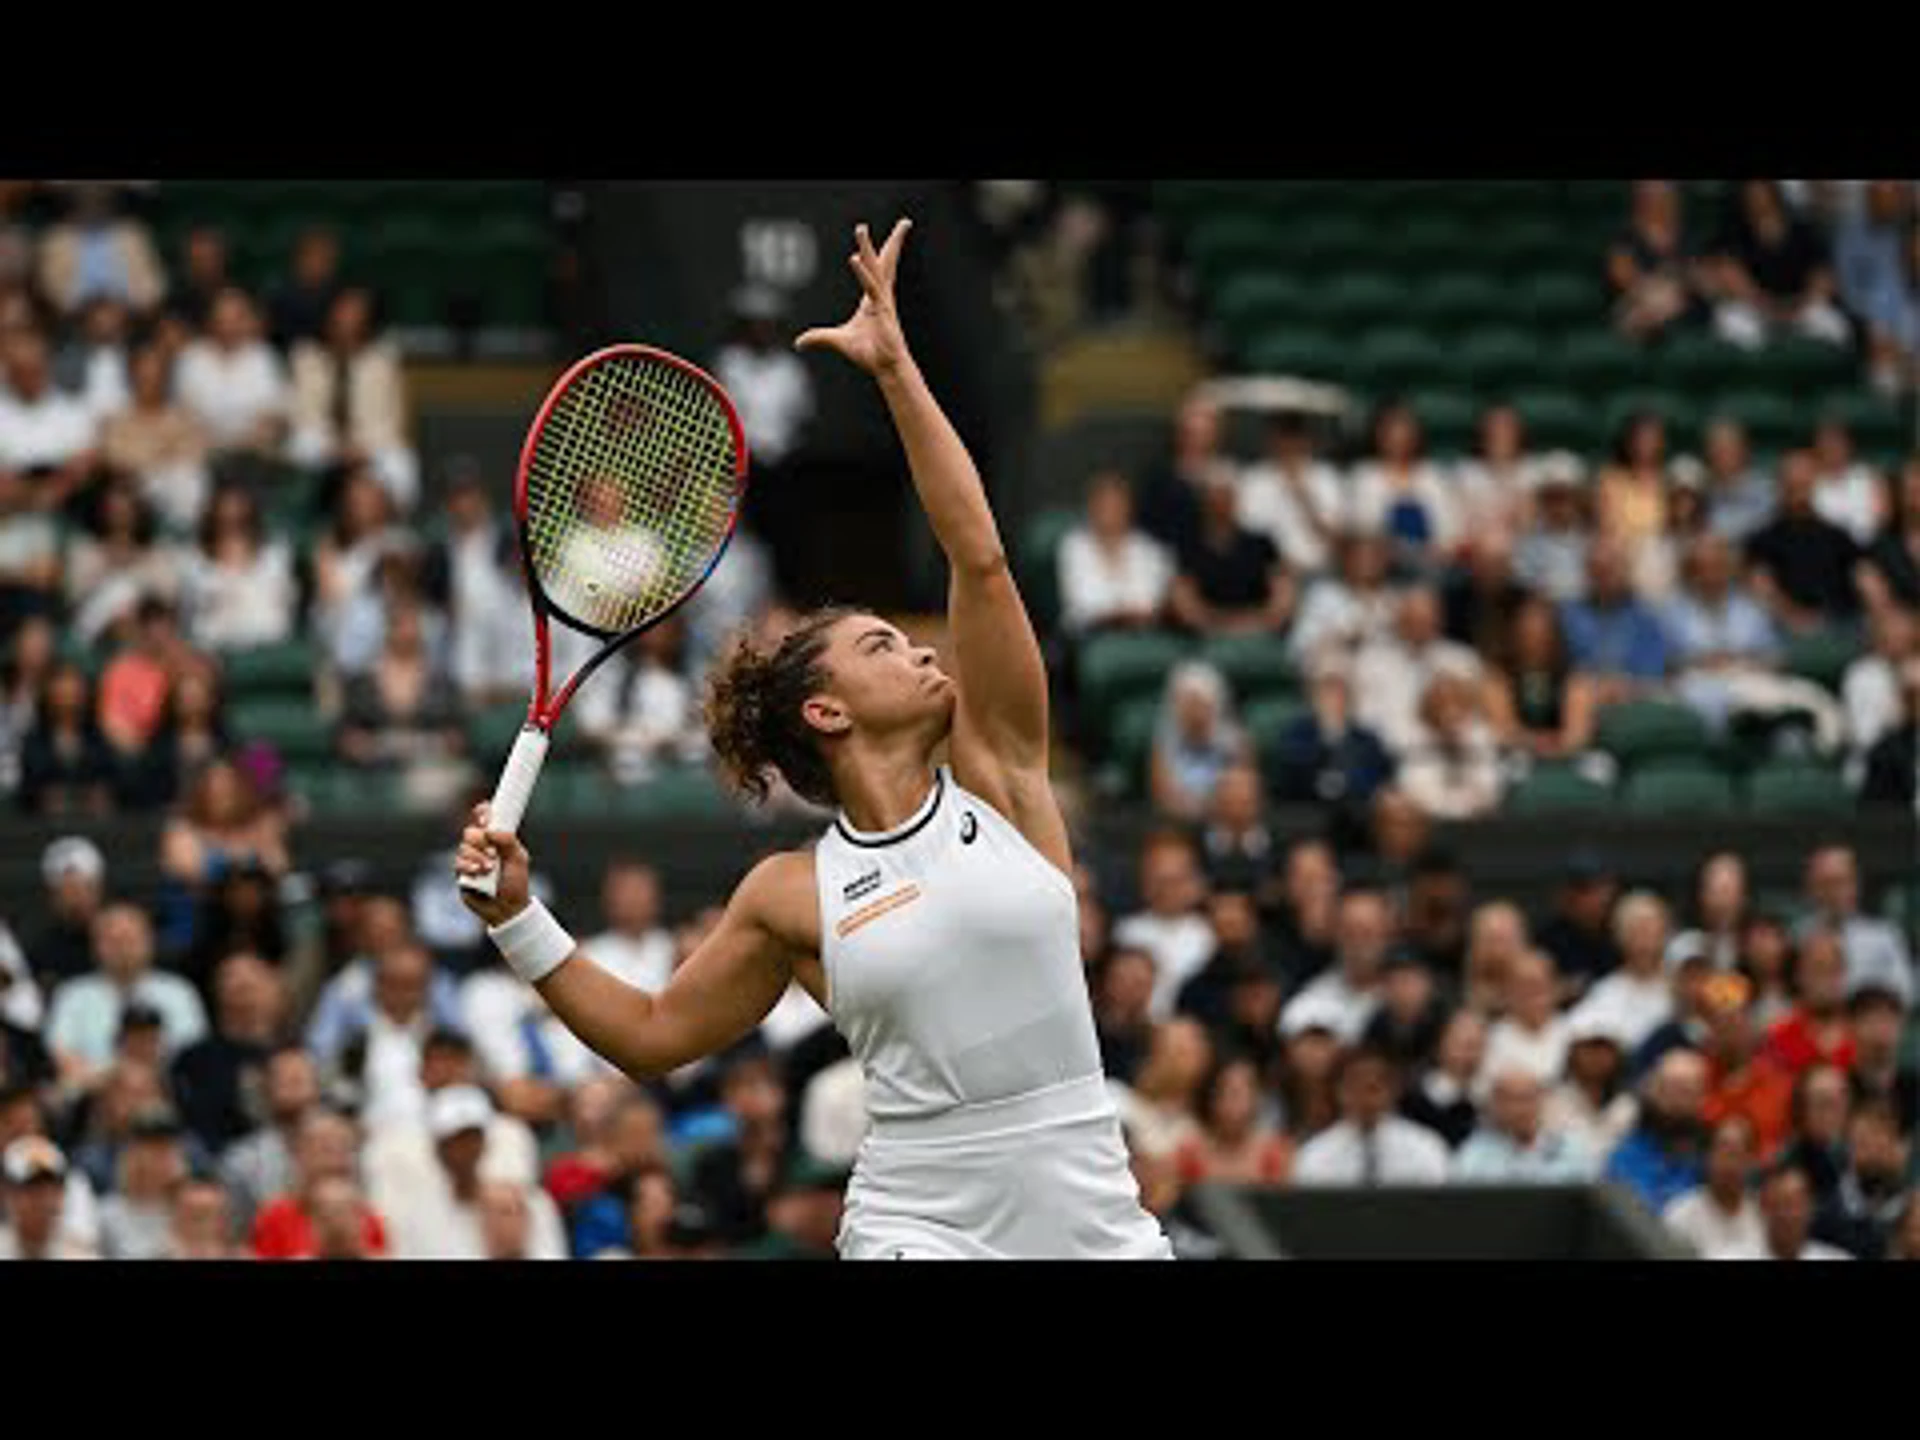 Jasmine Paolini v Bianca Andreescu | Women's singles | 3rd Round | Highlights | Wimbledon